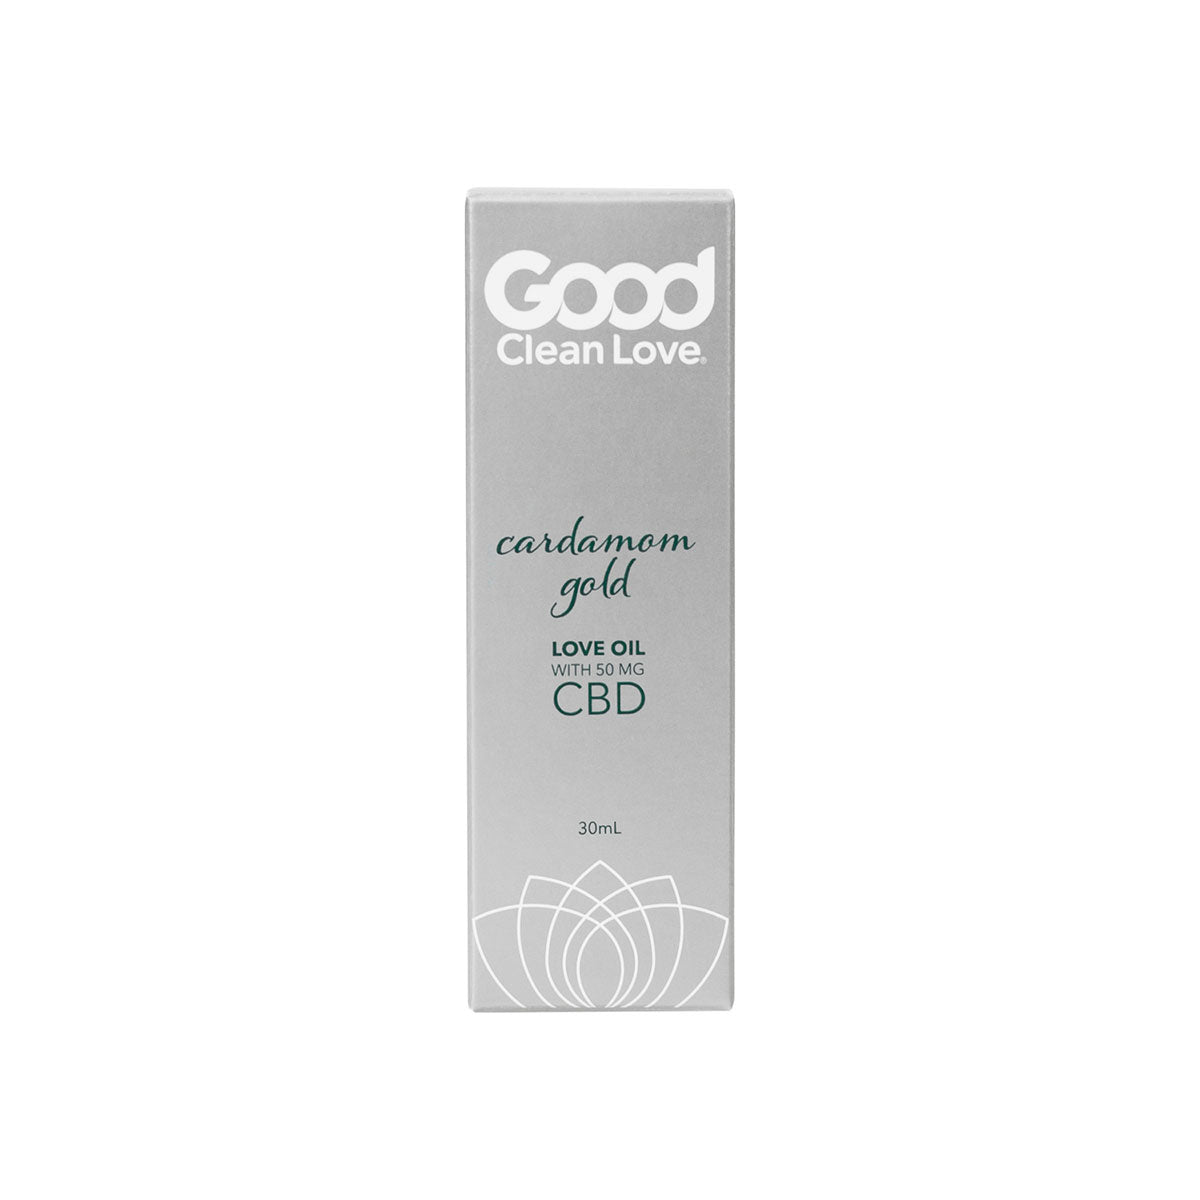 Good Clean Love Cardamom Gold CBD Love Oil 30ml